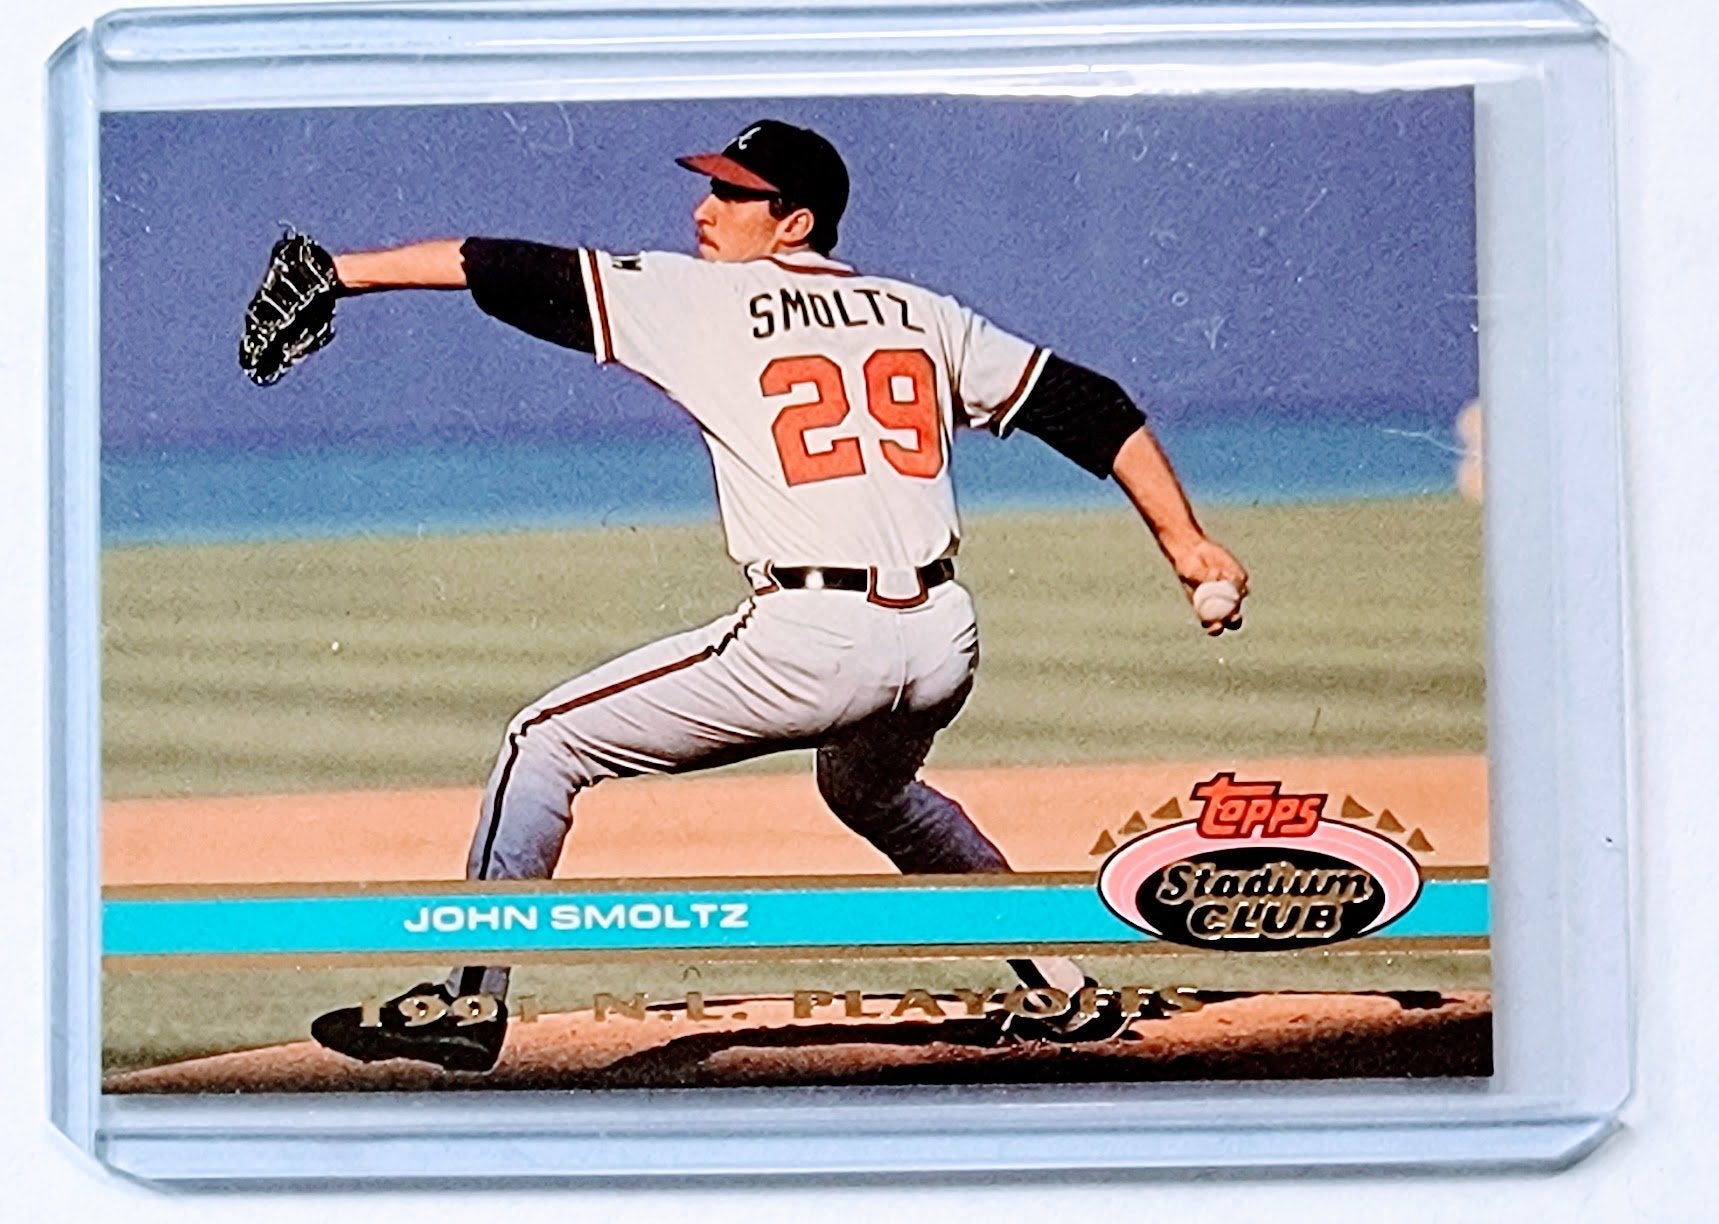 1992 Topps Stadium Club Dome John Smoltz 1991 Playoffs MLB Baseball Trading Card TPTV simple Xclusive Collectibles   